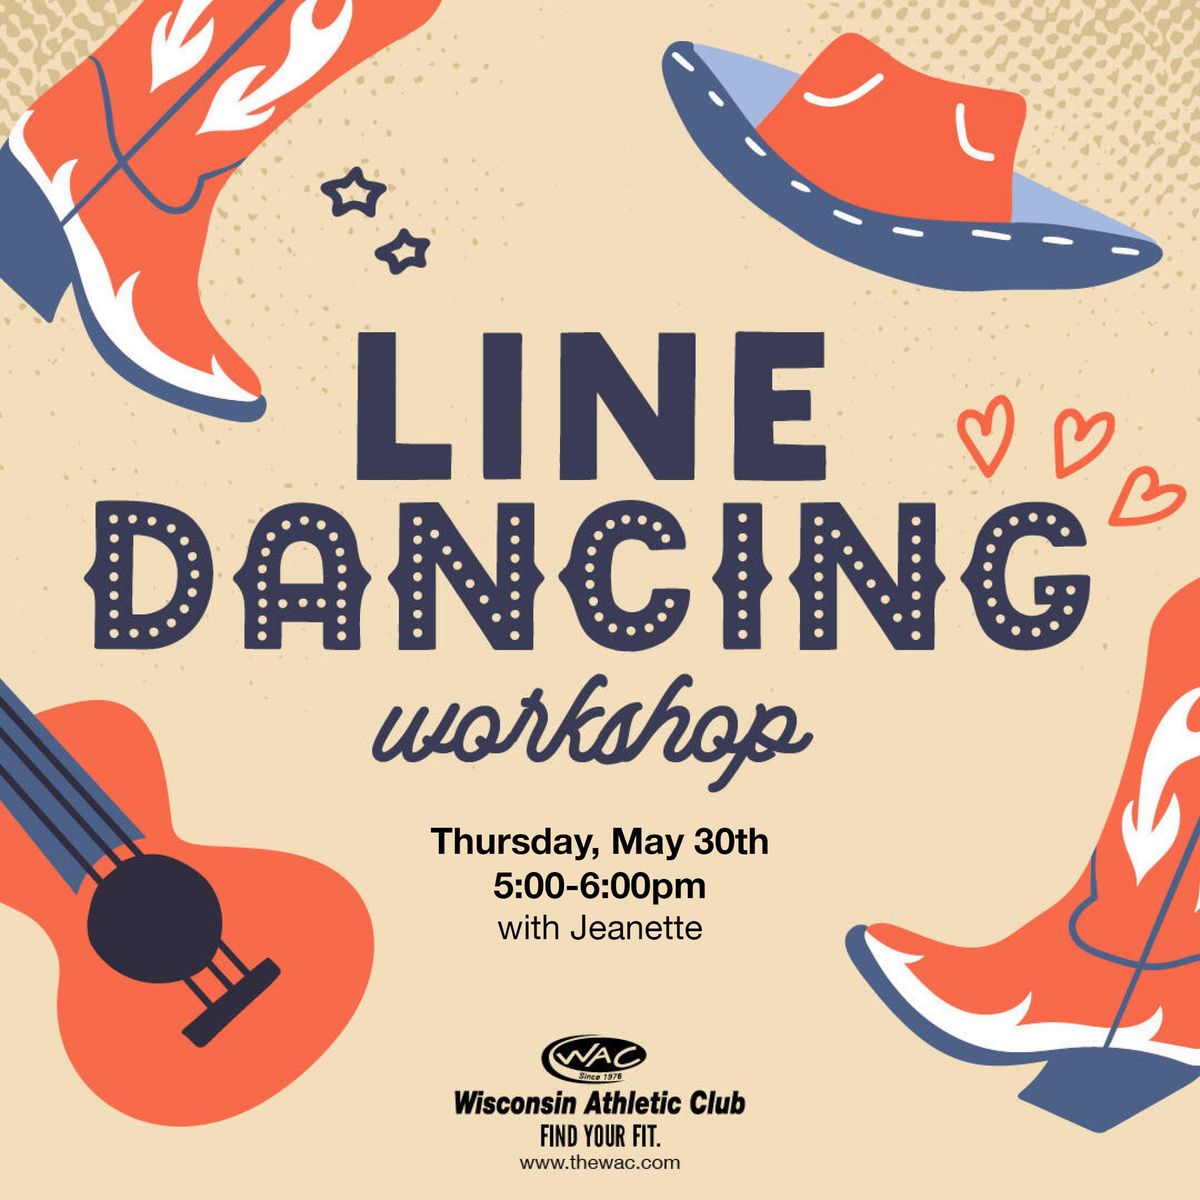 Line Dancing Workshop